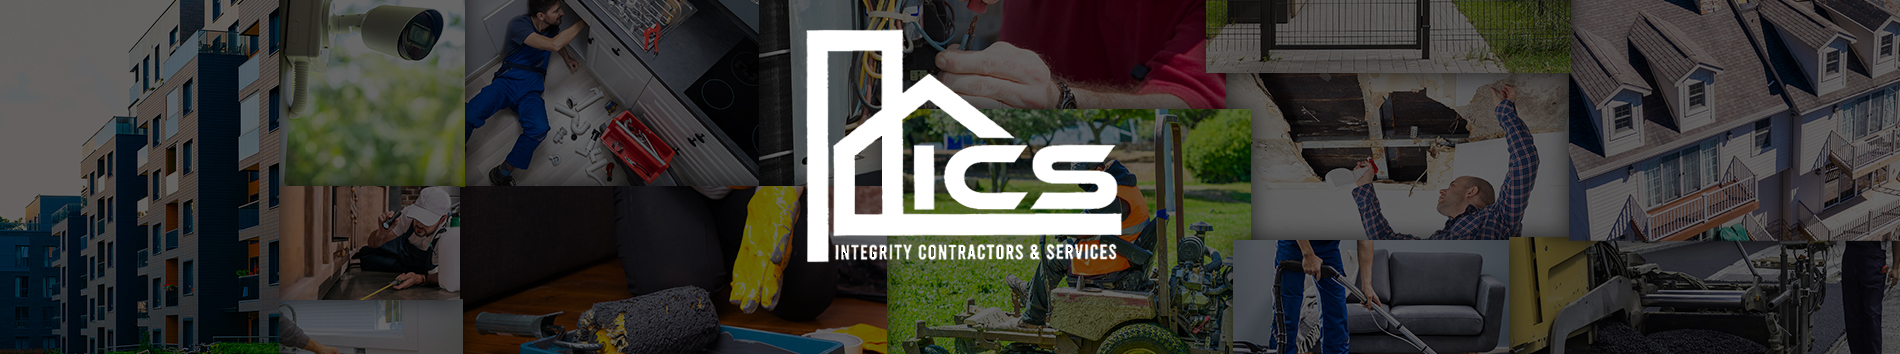 Integrity Contractors & Services